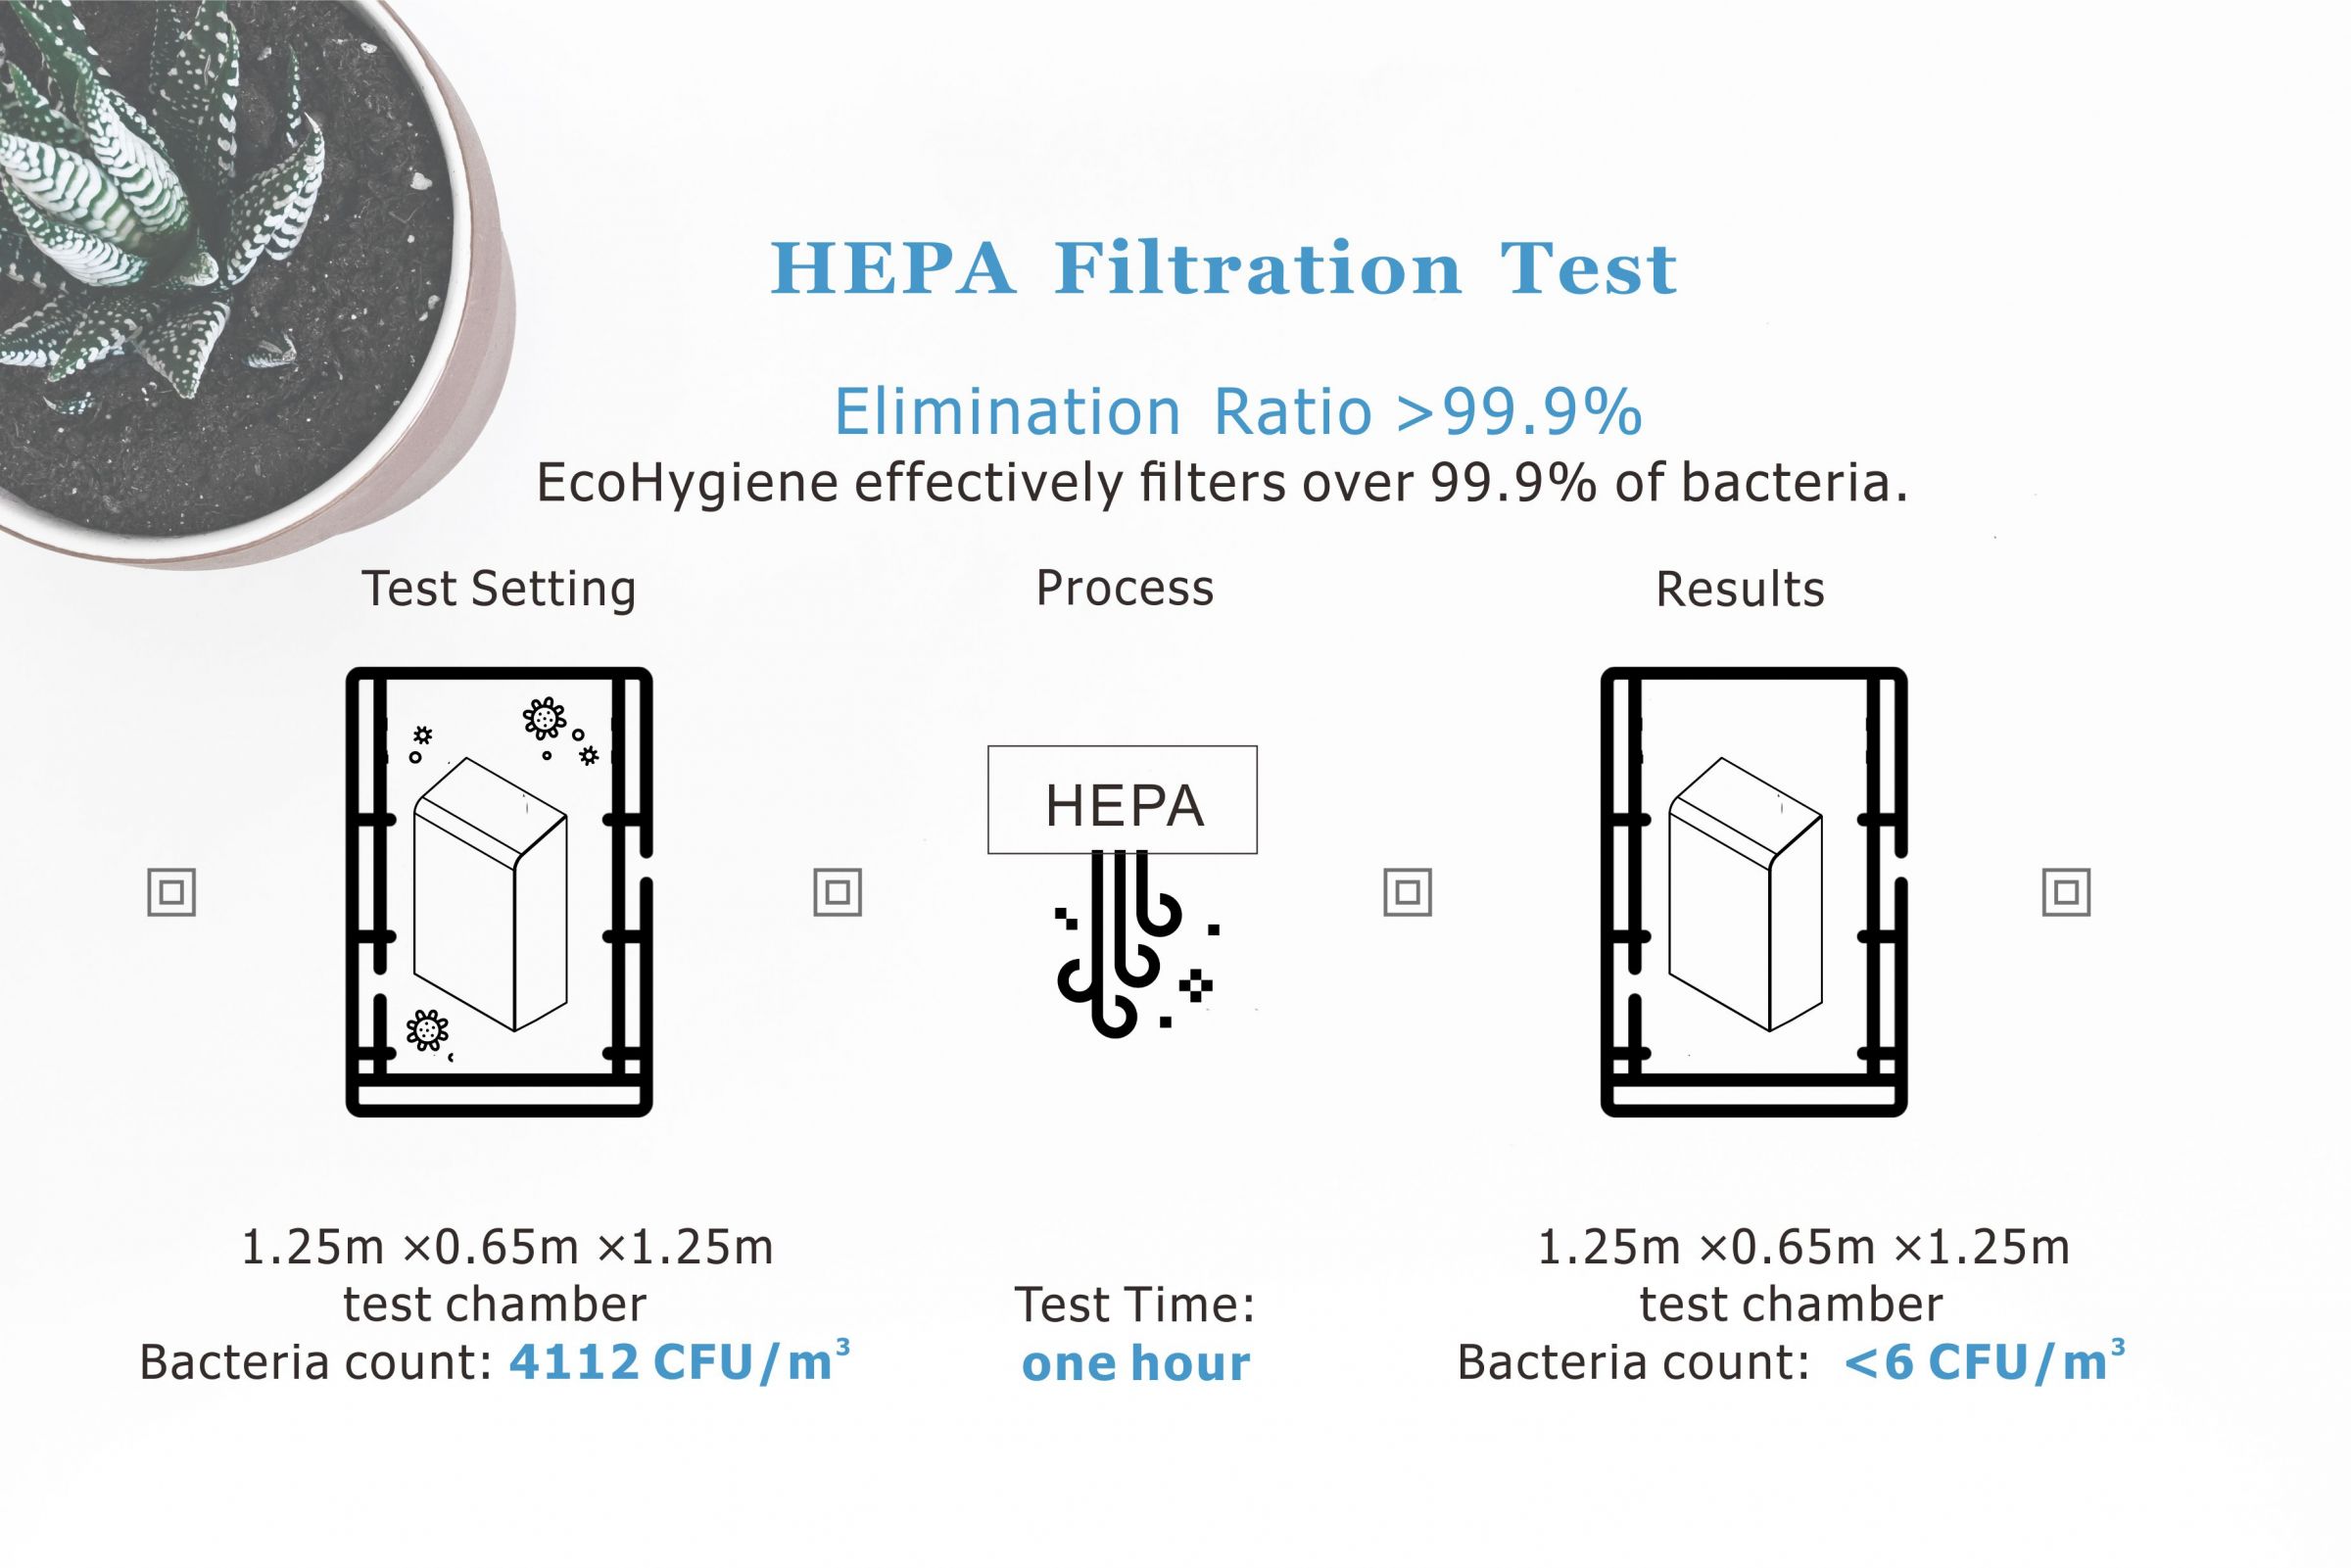  HEPA Filtration Test-Bacteria